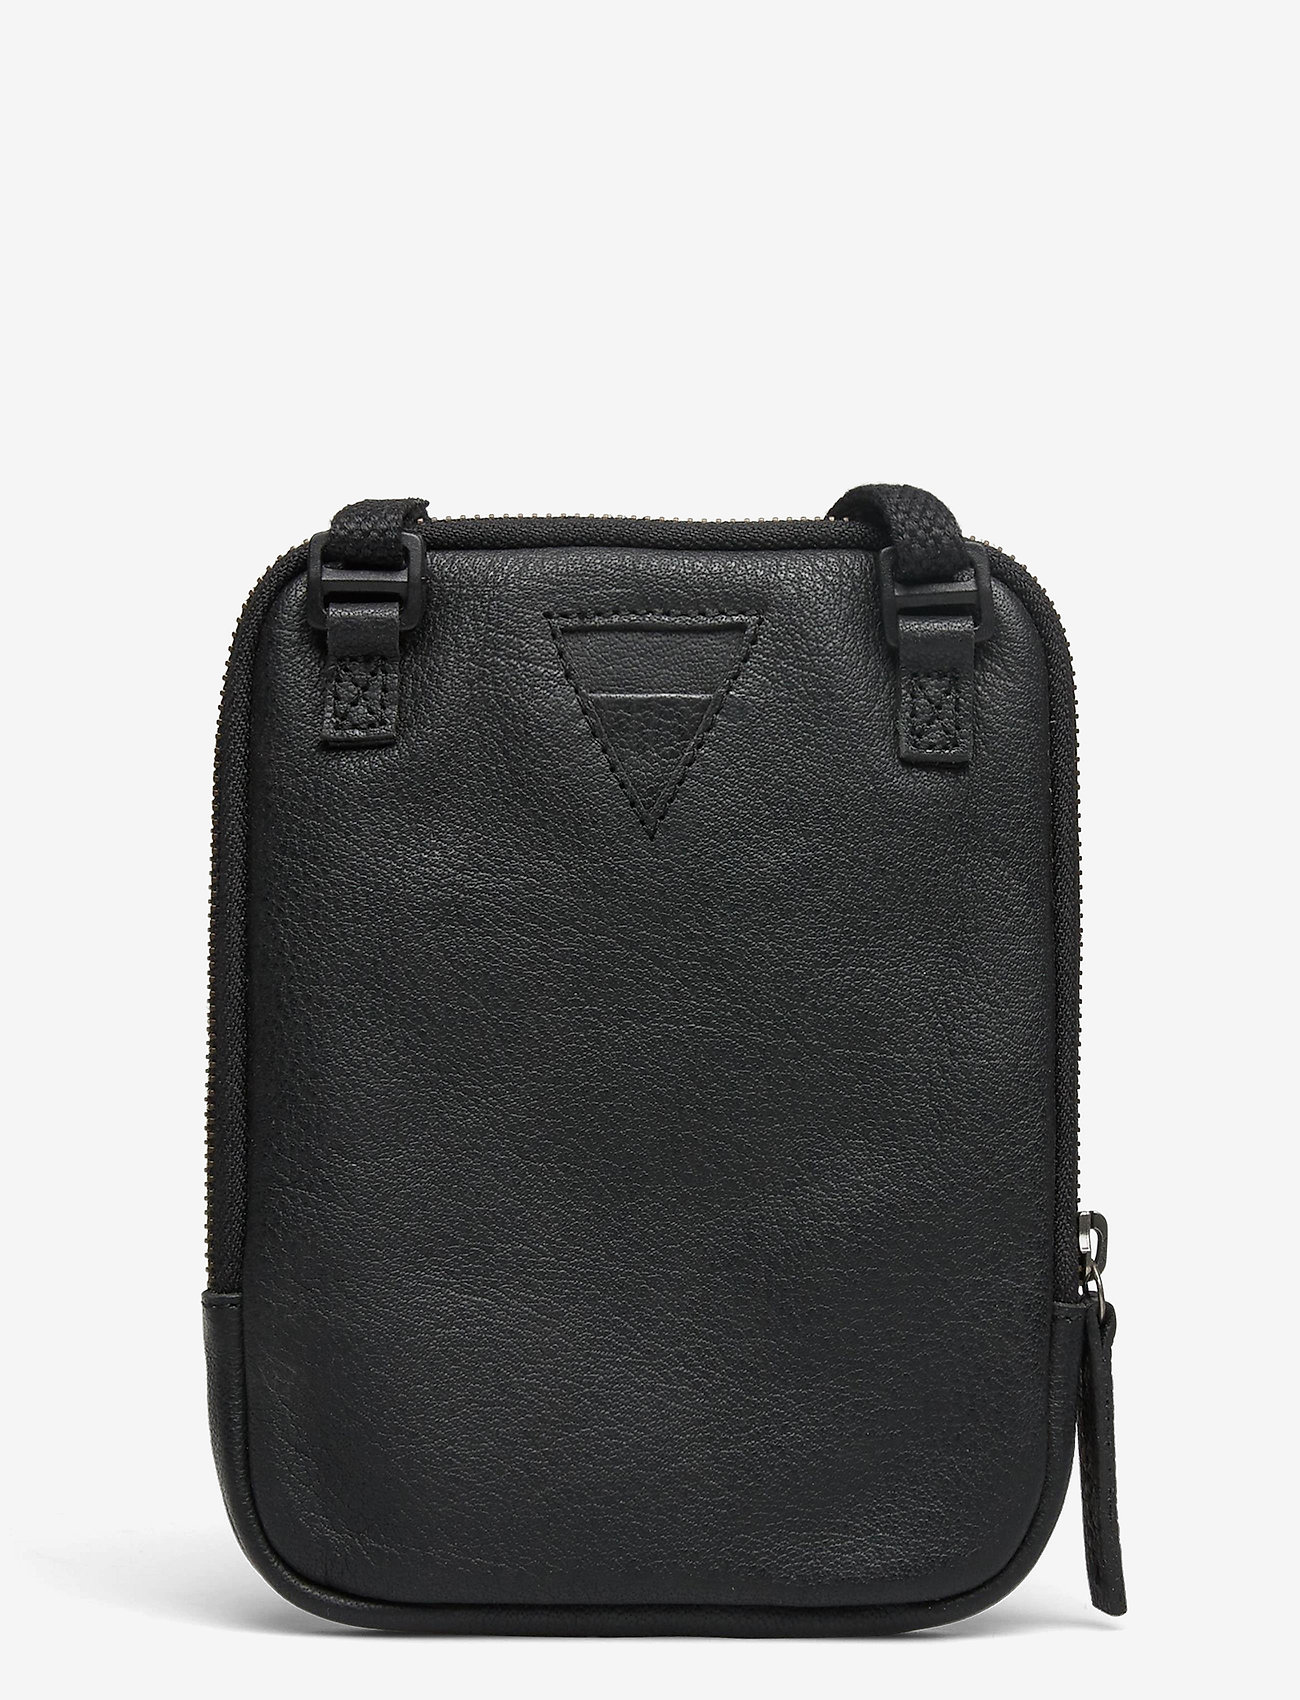 Still Nordic - Clean Mini Messenger - shoulder bags - black - 1